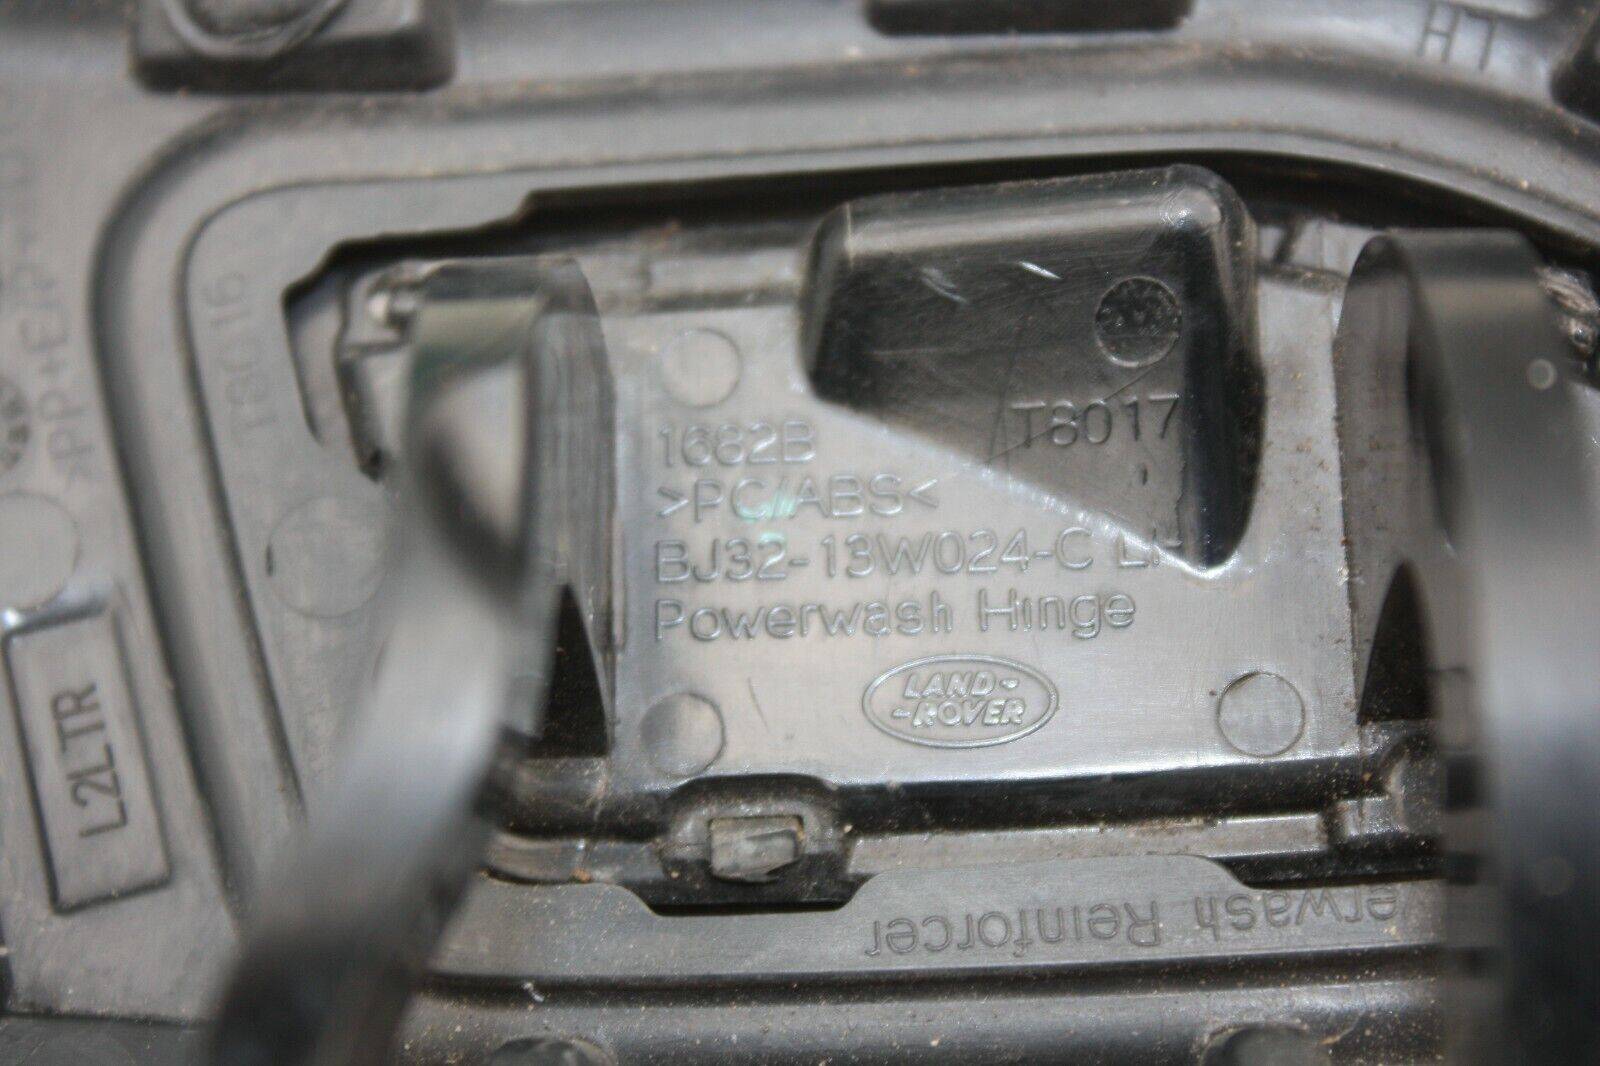 Range-Rover-Evoque-Front-Left-Side-Headlight-Washer-Cover-BJ32-13W024-C-Genuine-175367522041-4